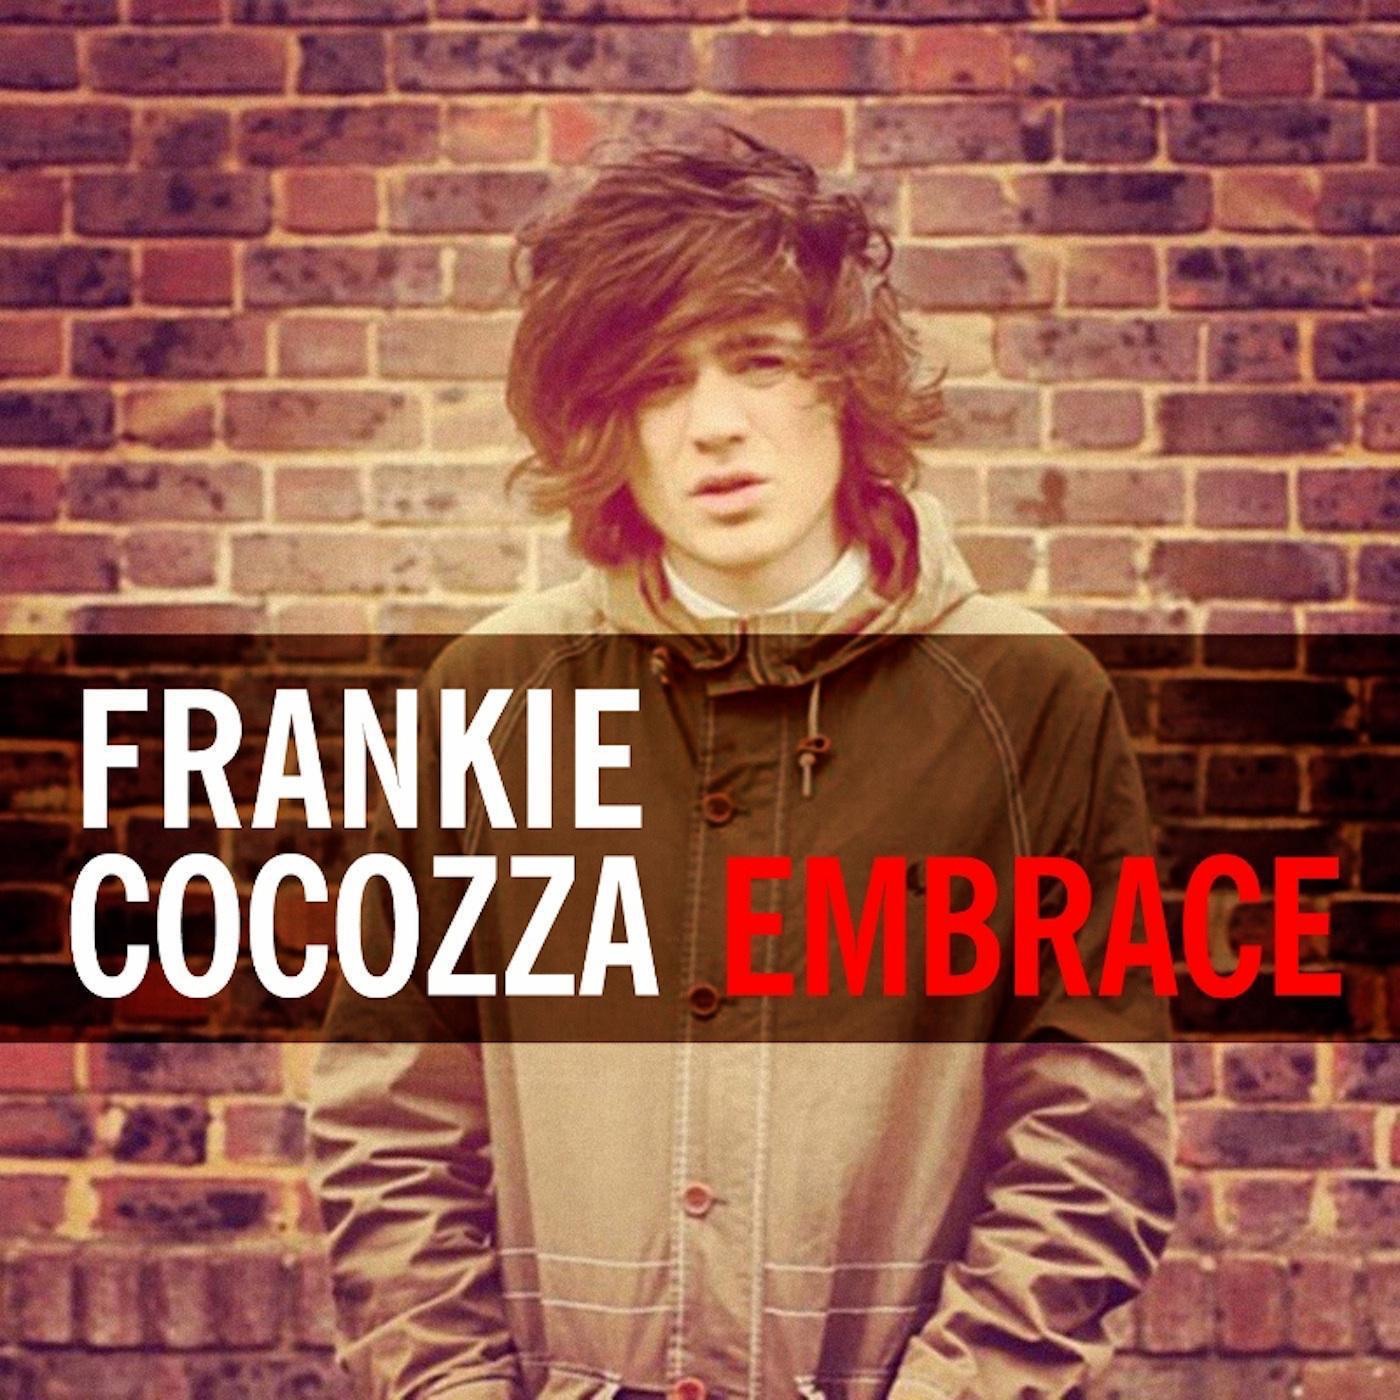 Frankie Cocozza Embrace cover artwork